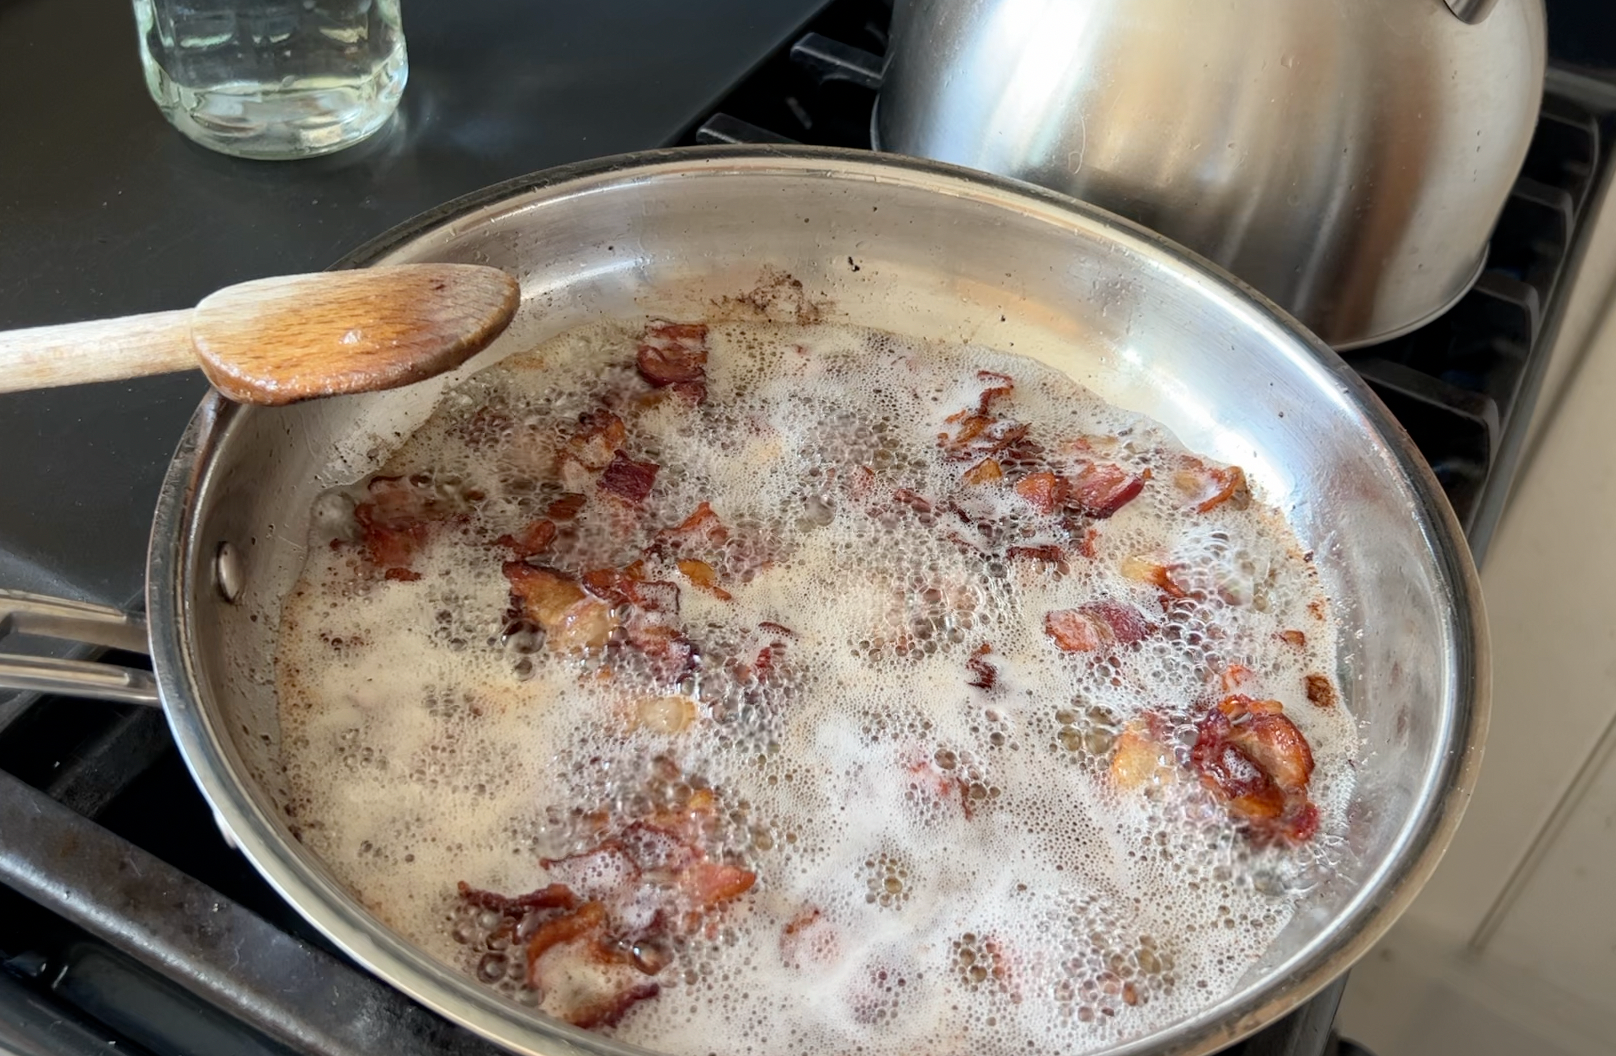 Bacon lardons cooking in a pan.